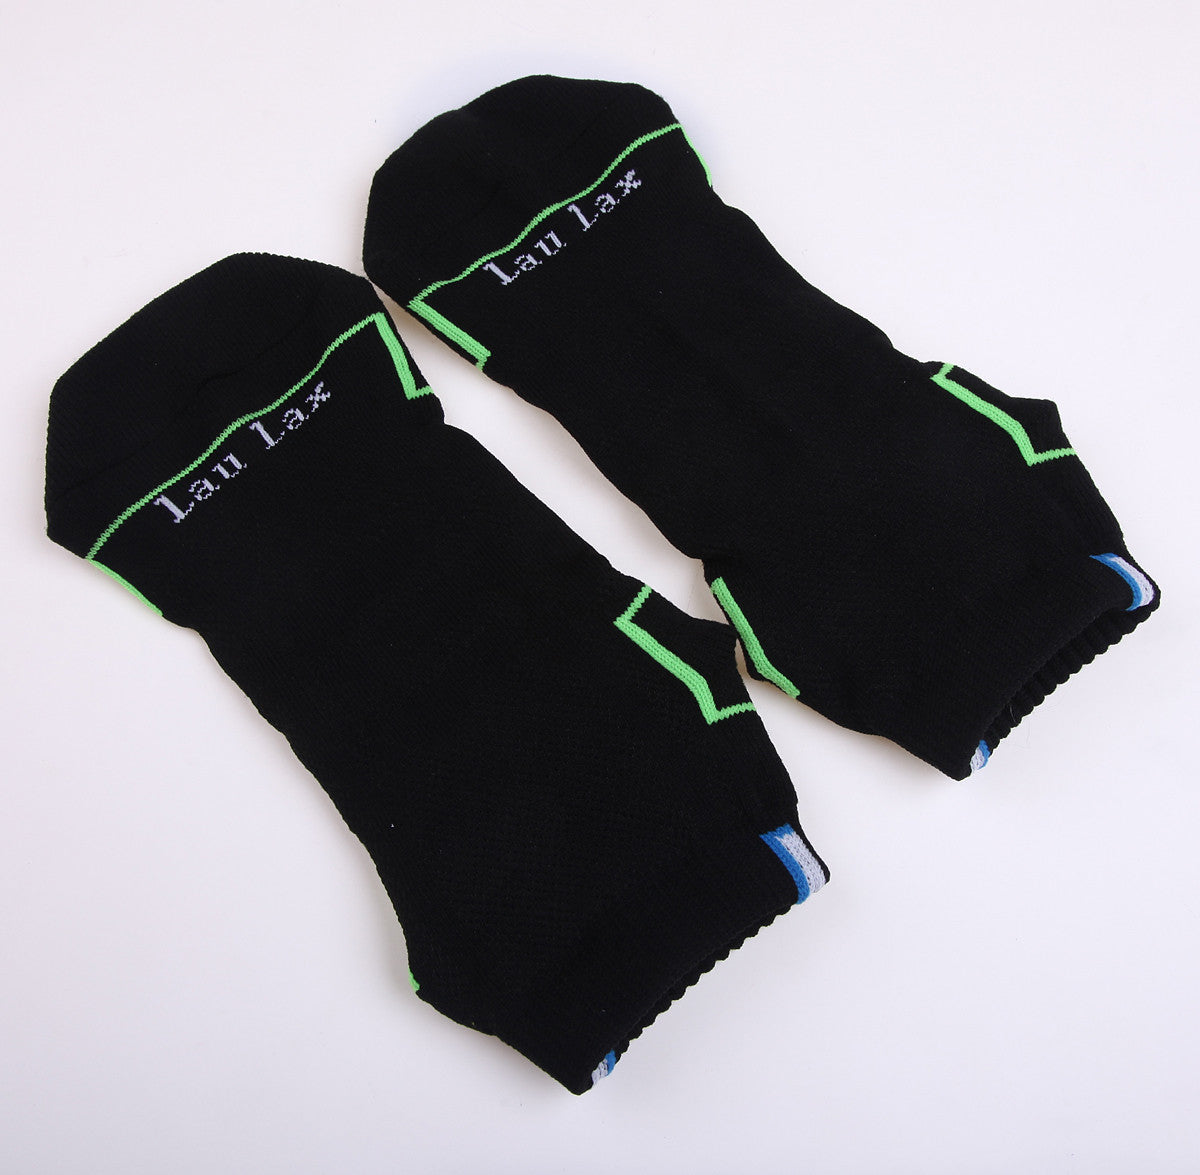 COOLMAX Professional Running Socks - Plantar Fasia Support - Black - Size UK 7 - 11